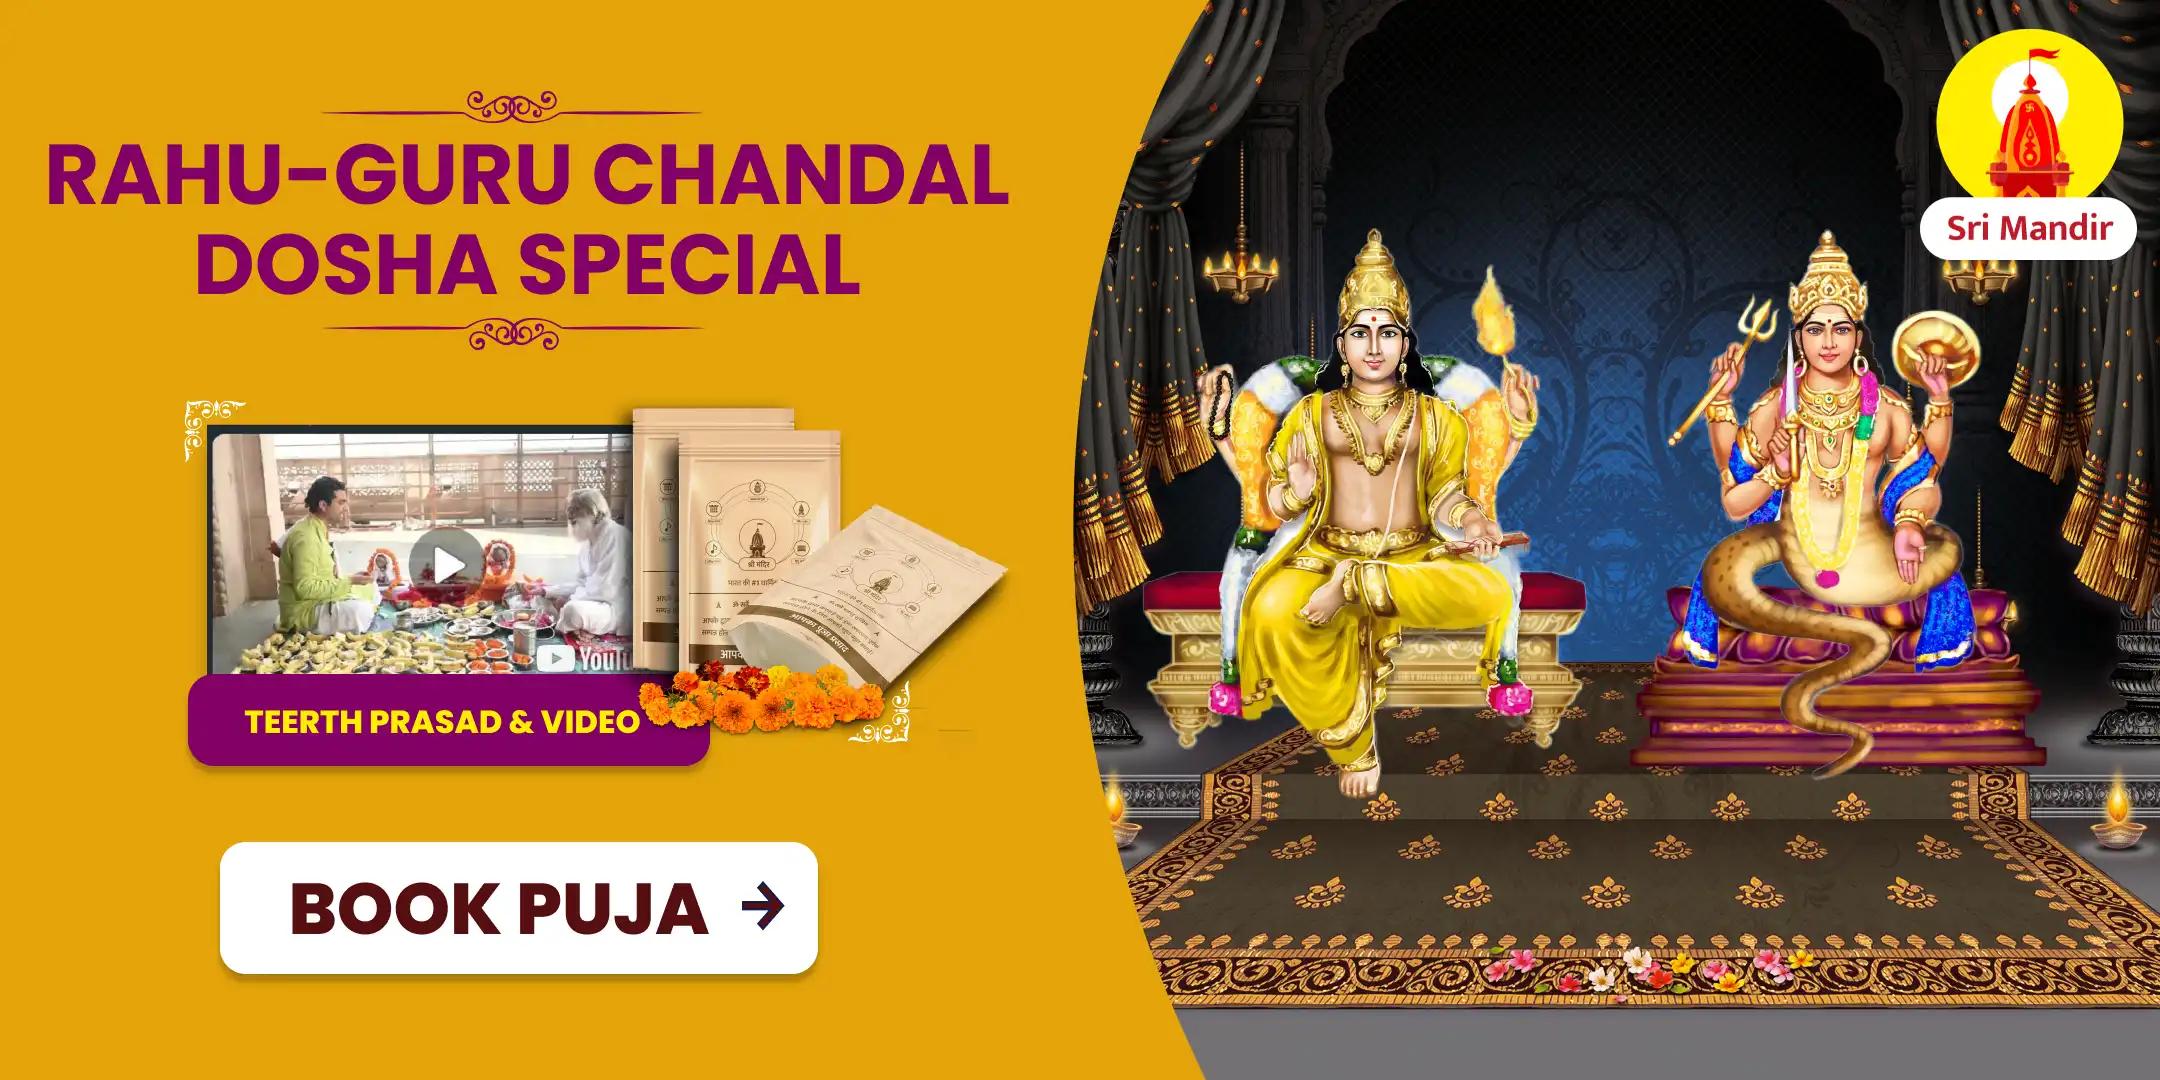 Kashi Special Rahu-Guru Chandal Dosha Shanti Mahapuja for Relationship Bliss and Promoting Financial Stability